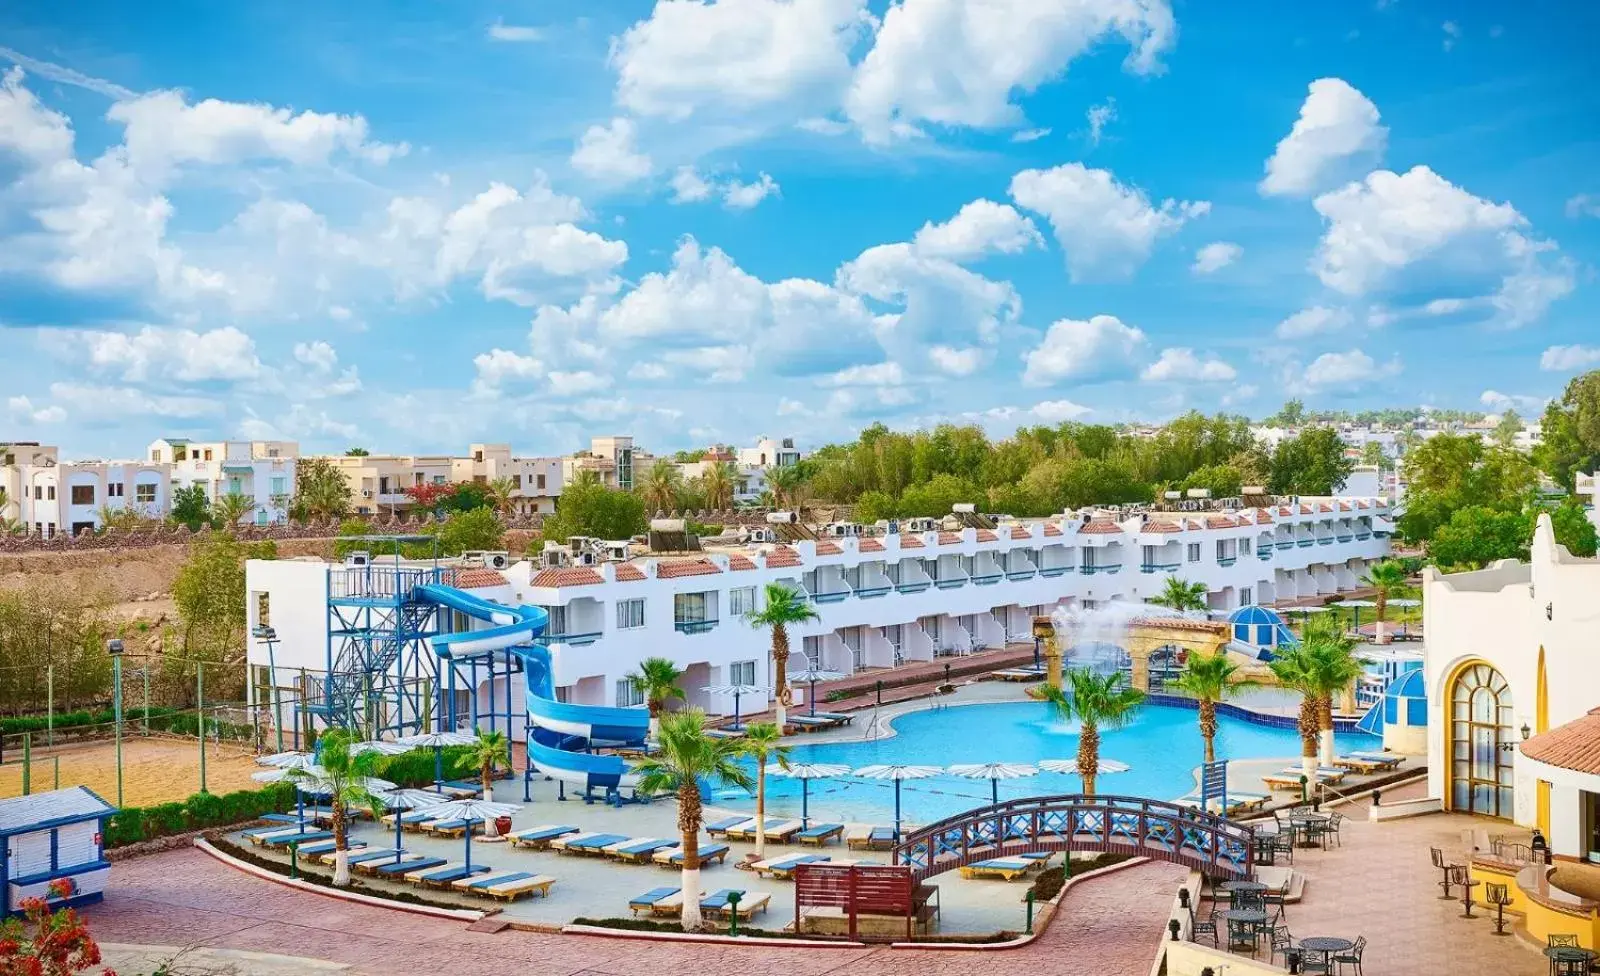 Aqua park, Pool View in Dreams Vacation Resort - Sharm El Sheikh